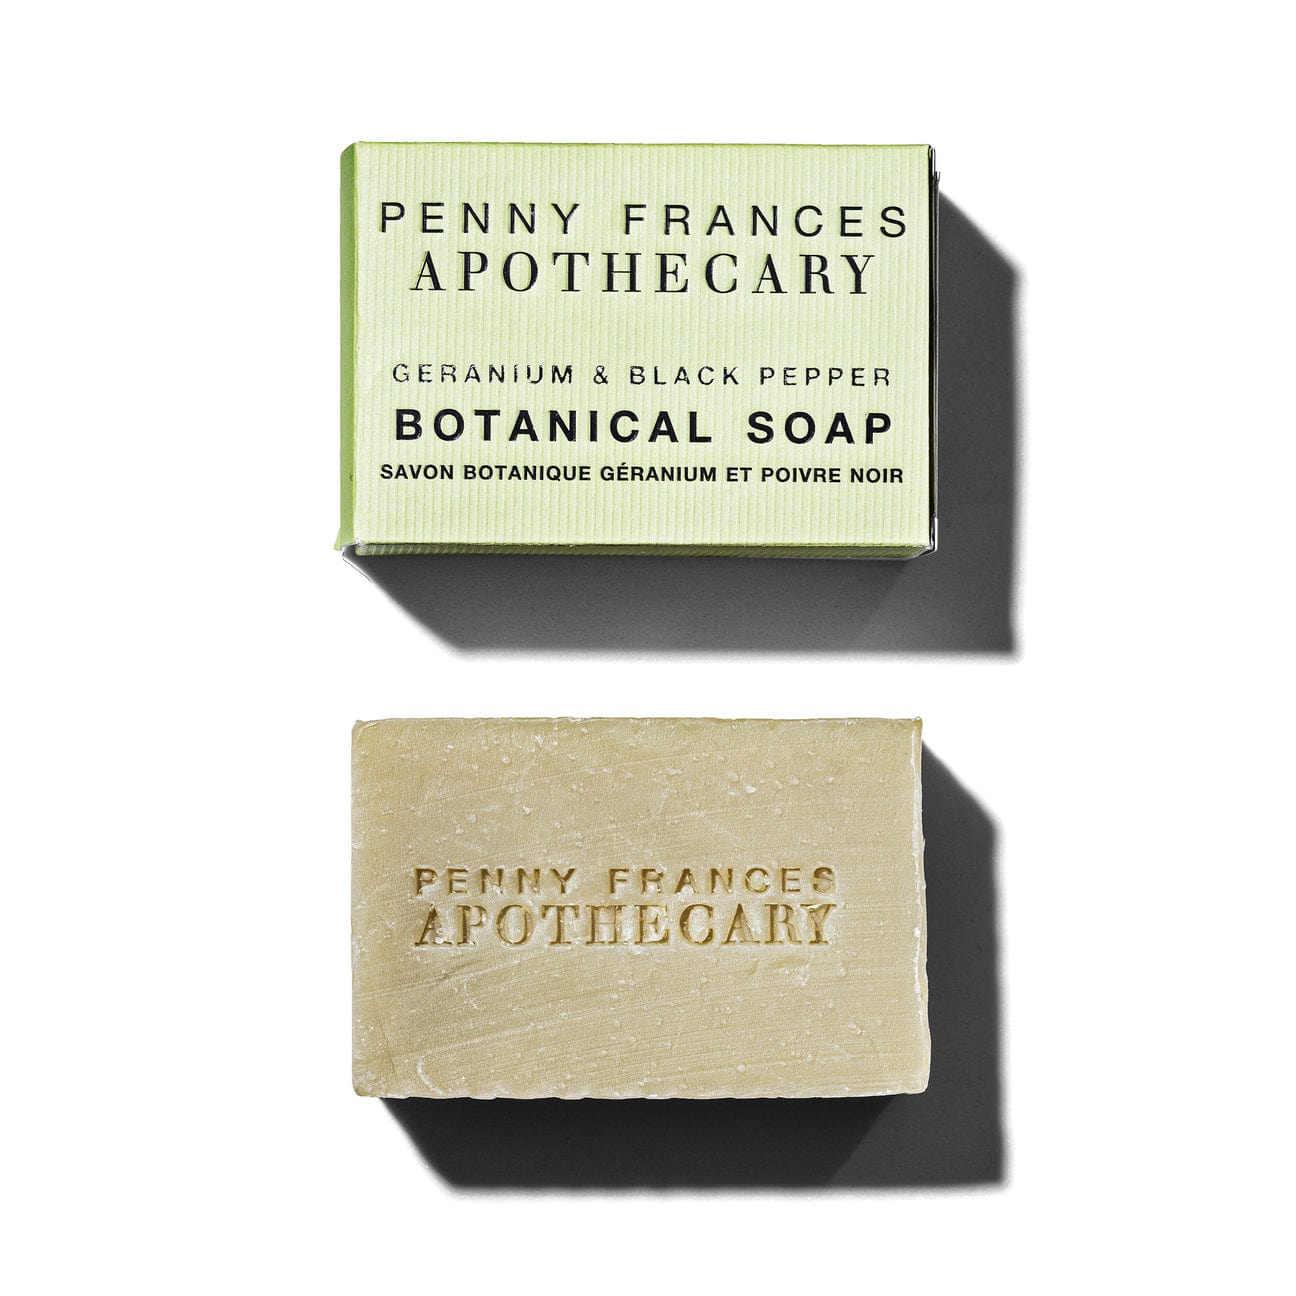 Penny Frances Apothecary soap Botanical Soap - Geranium & Black Pepper sunja link - canada